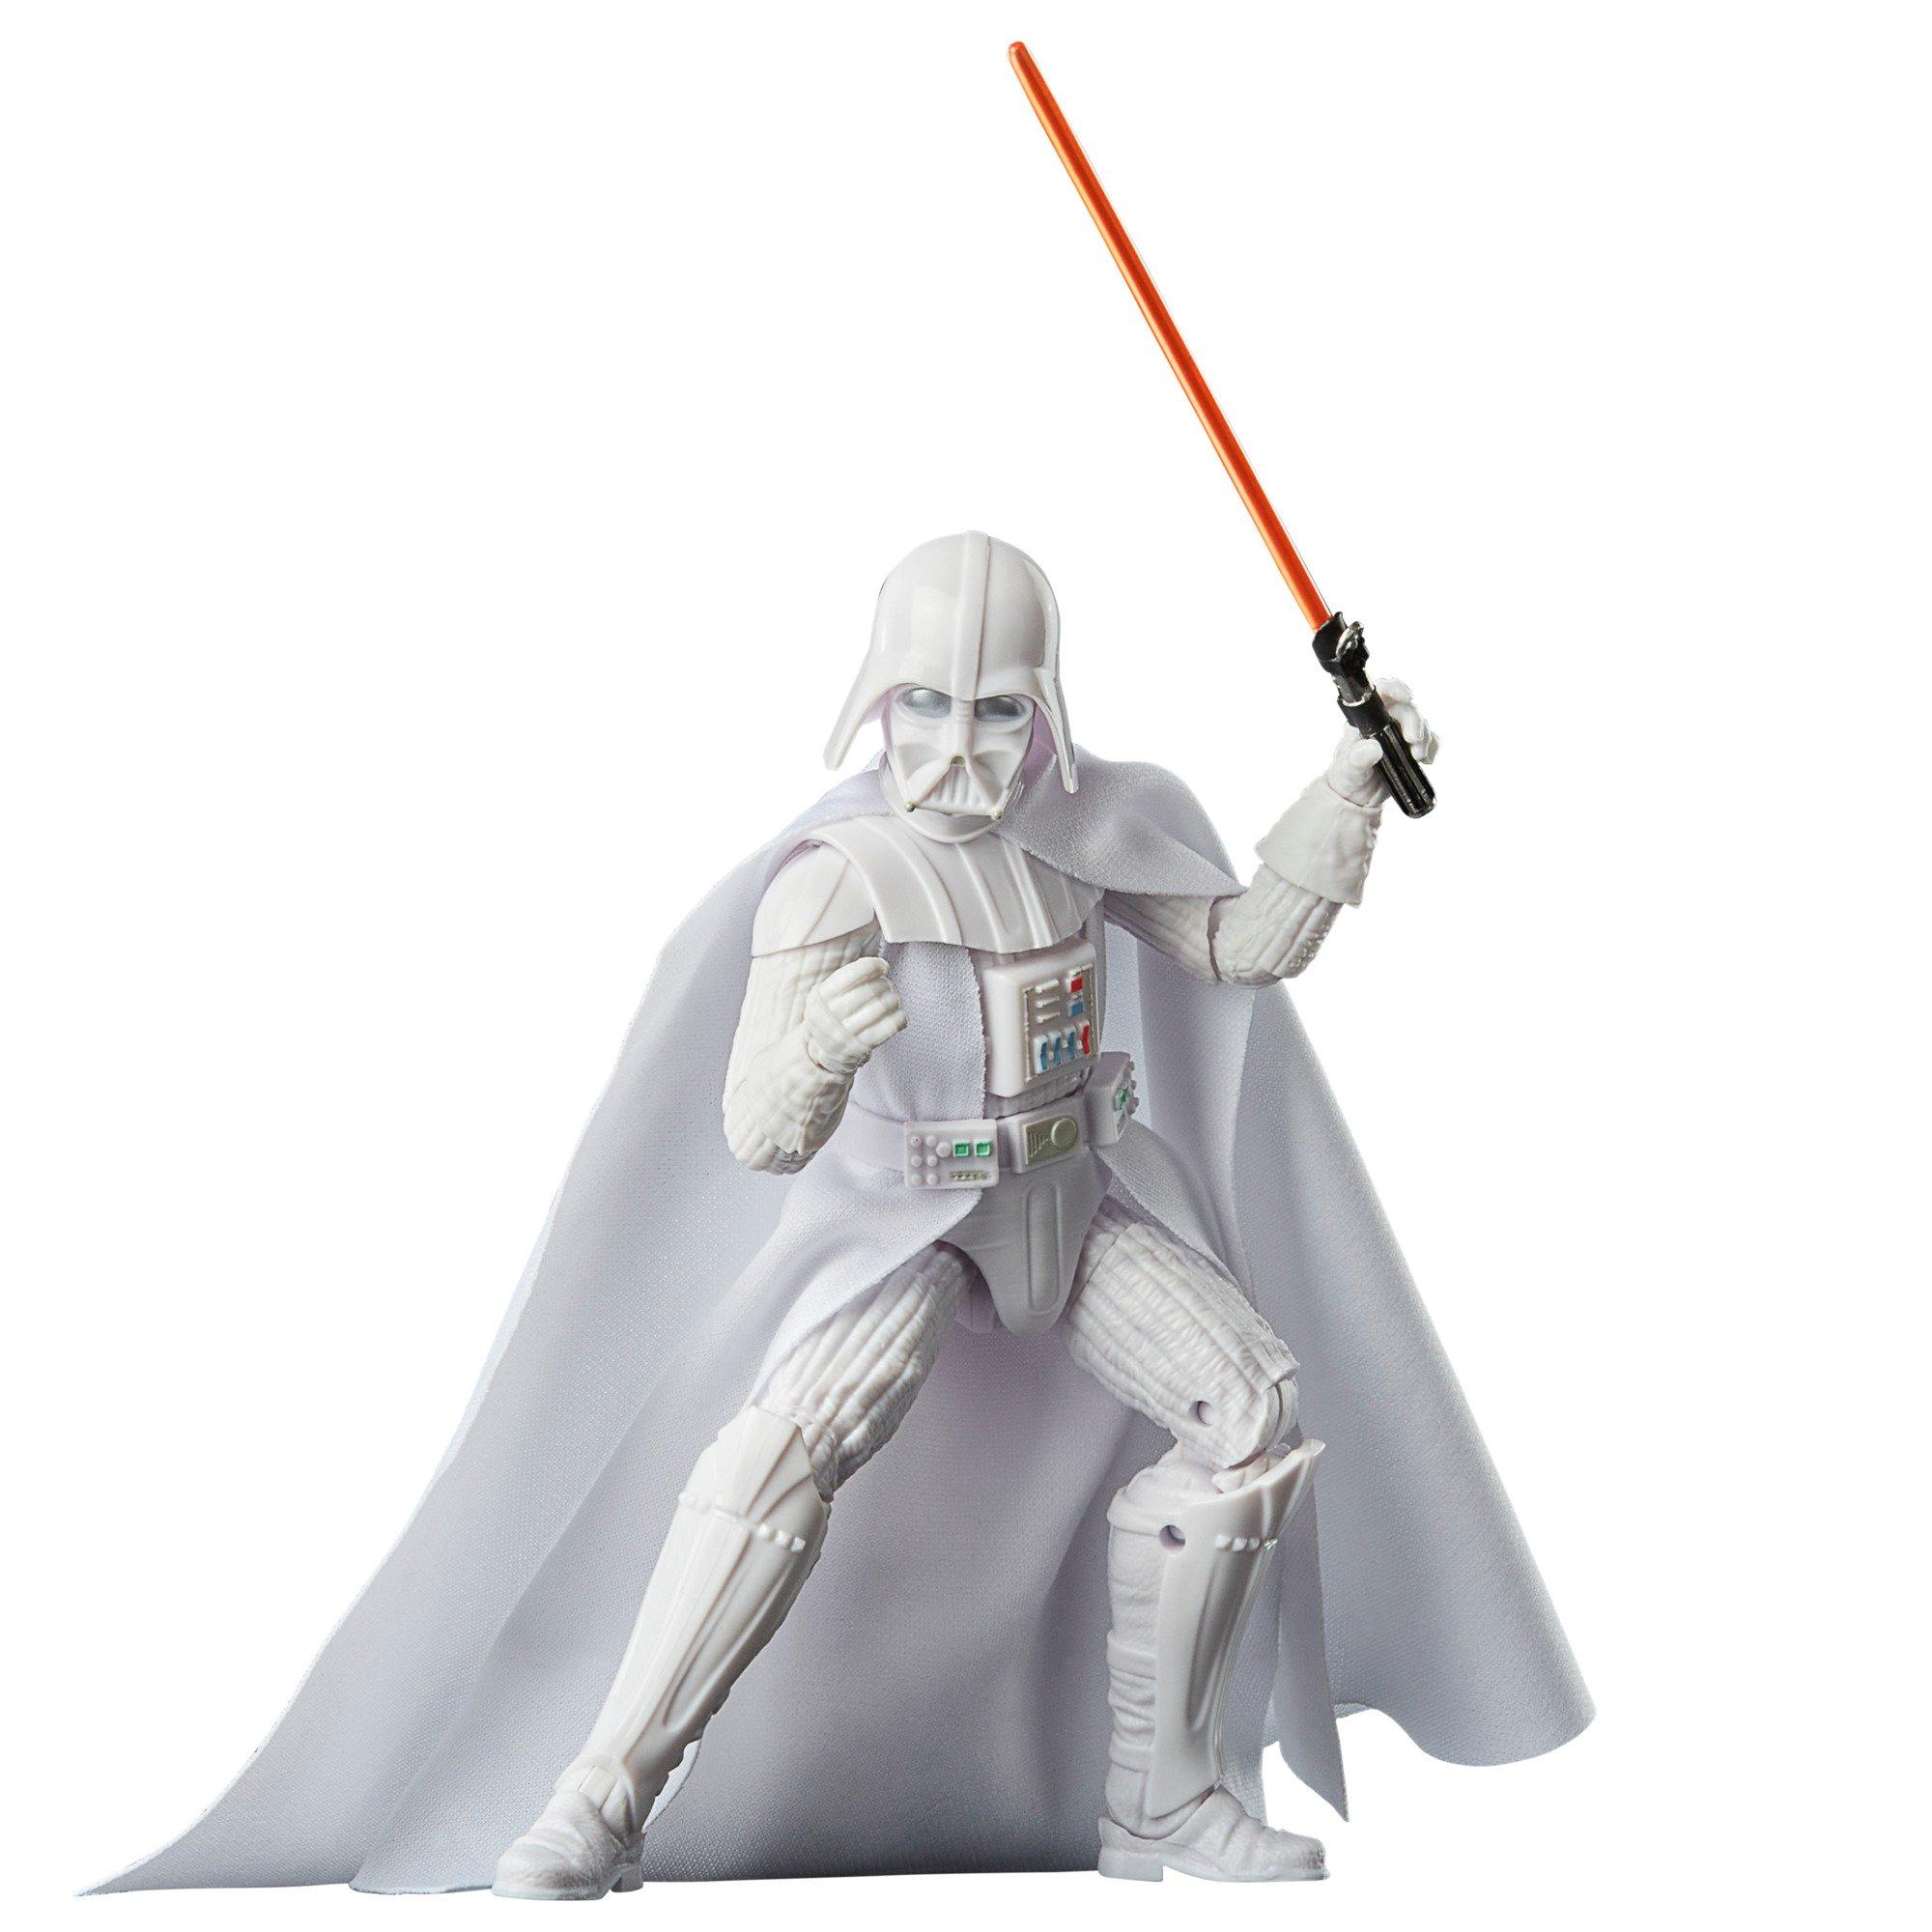 Hasbro Star Wars The Black Series Darth Vader Action Figure for sale online 